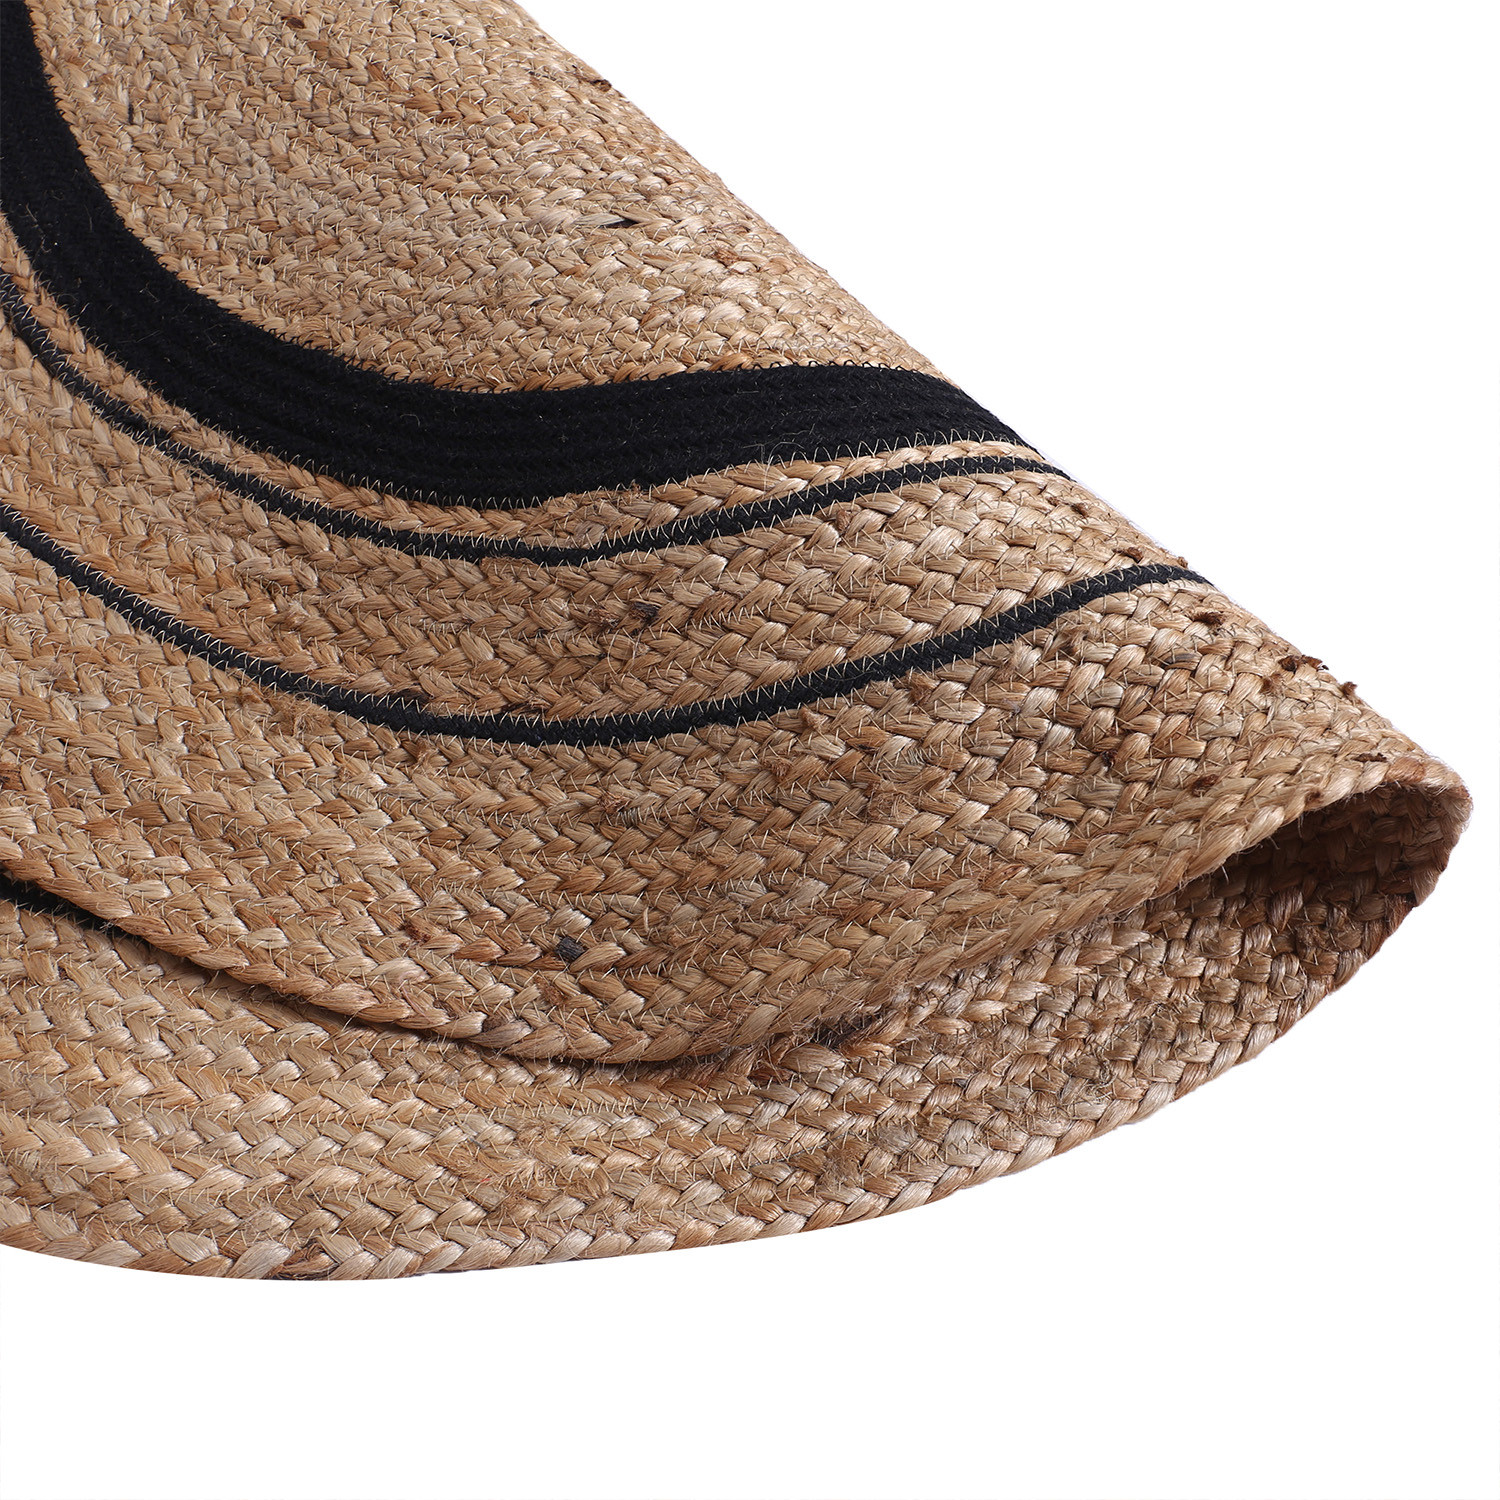 Kuber Industries Handmade Carpet|Cotton Circular Shape Black Layer Door Mat|Jute Area Rugs For Meditation,Living Room,Dining Room & Home Décor,92x92 cm,(Brown)